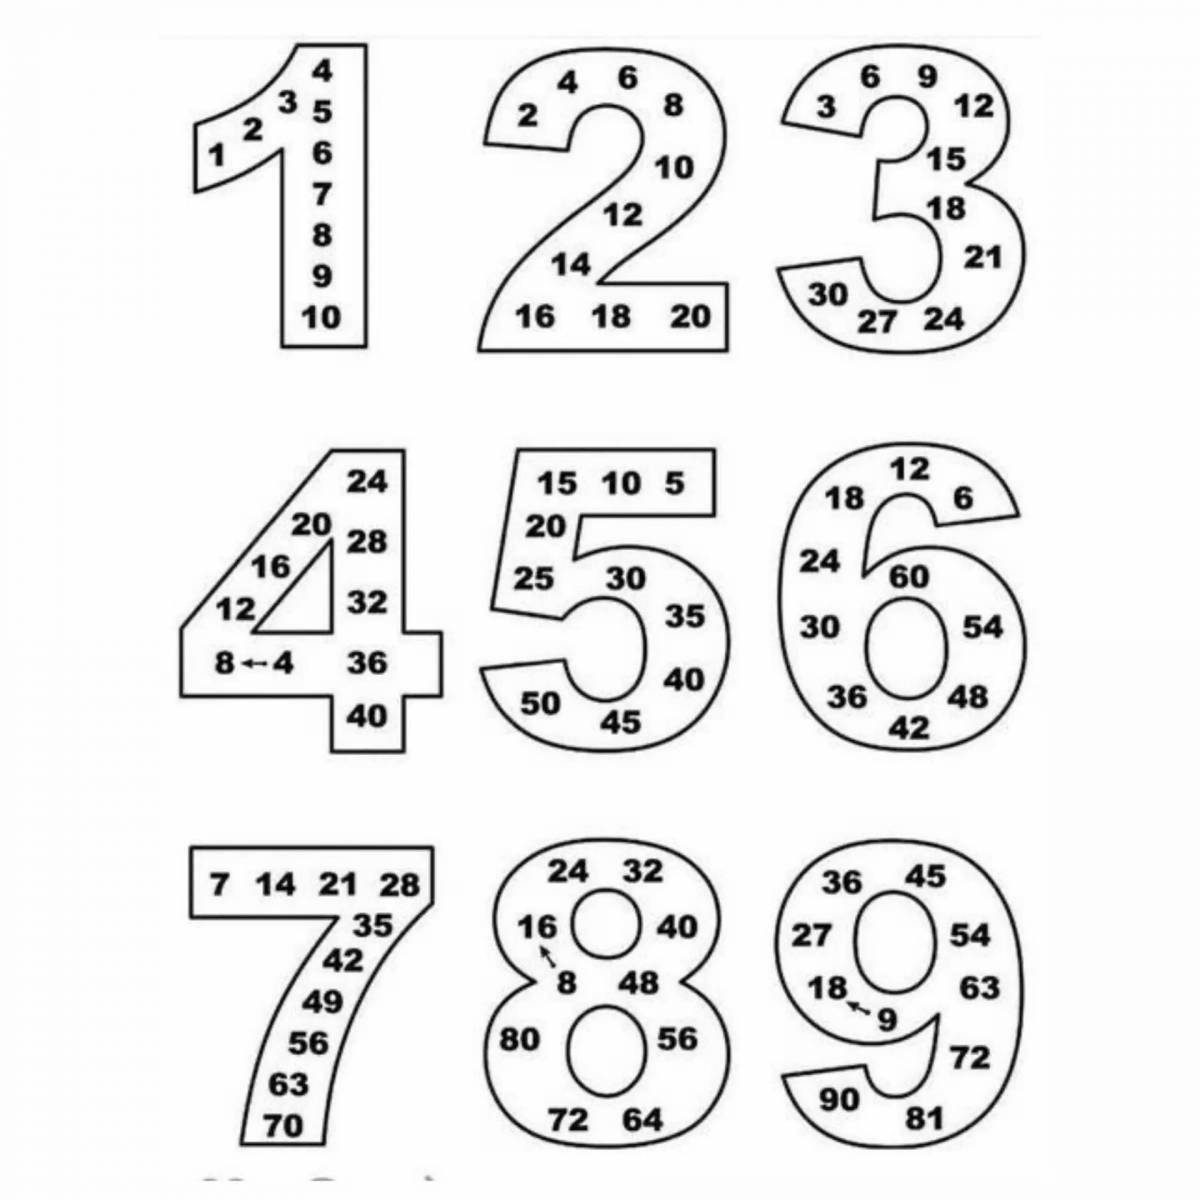 Joyful multiplication table for 5